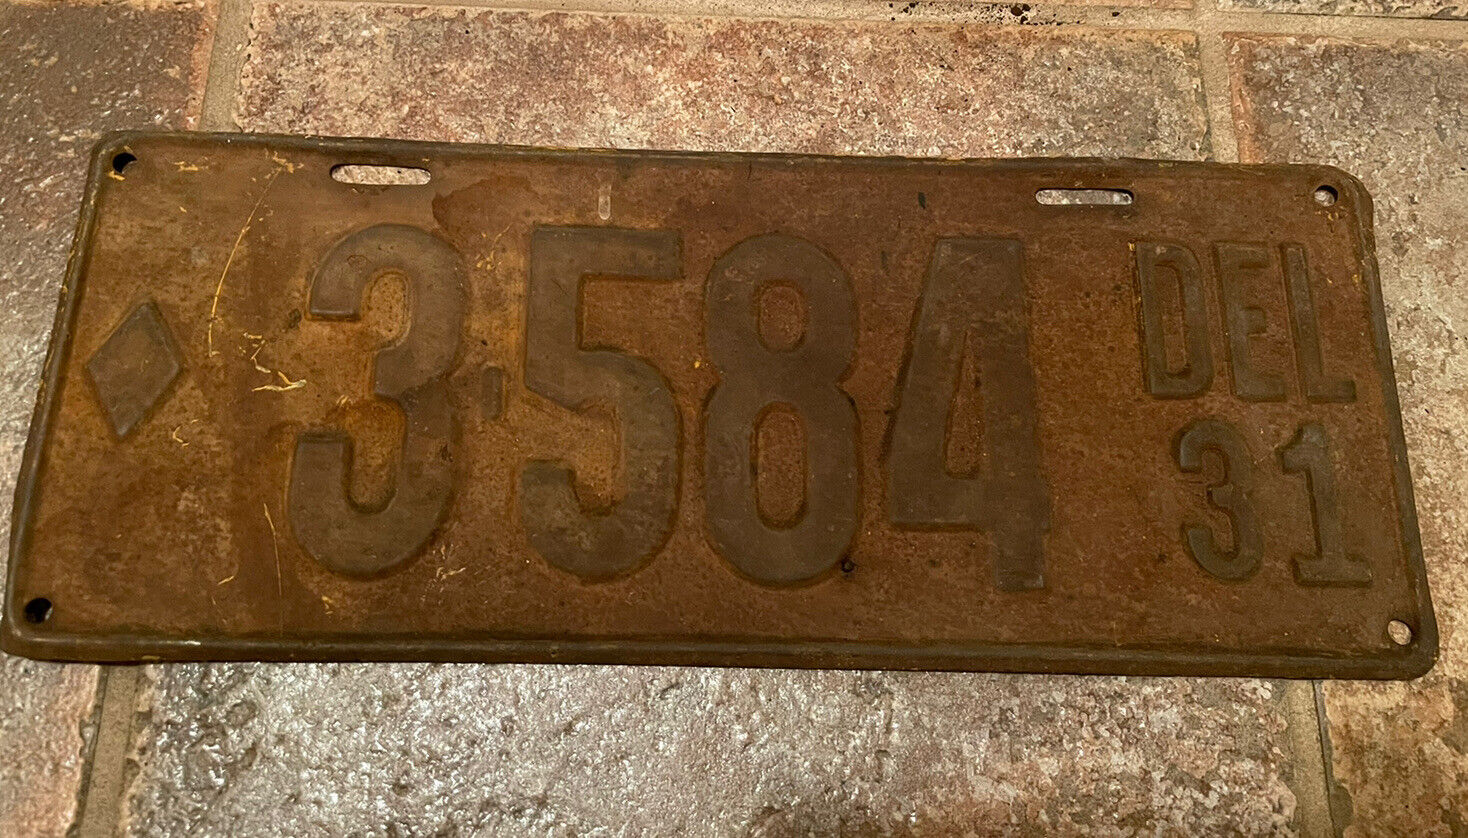 1931 Delaware license plate 3584